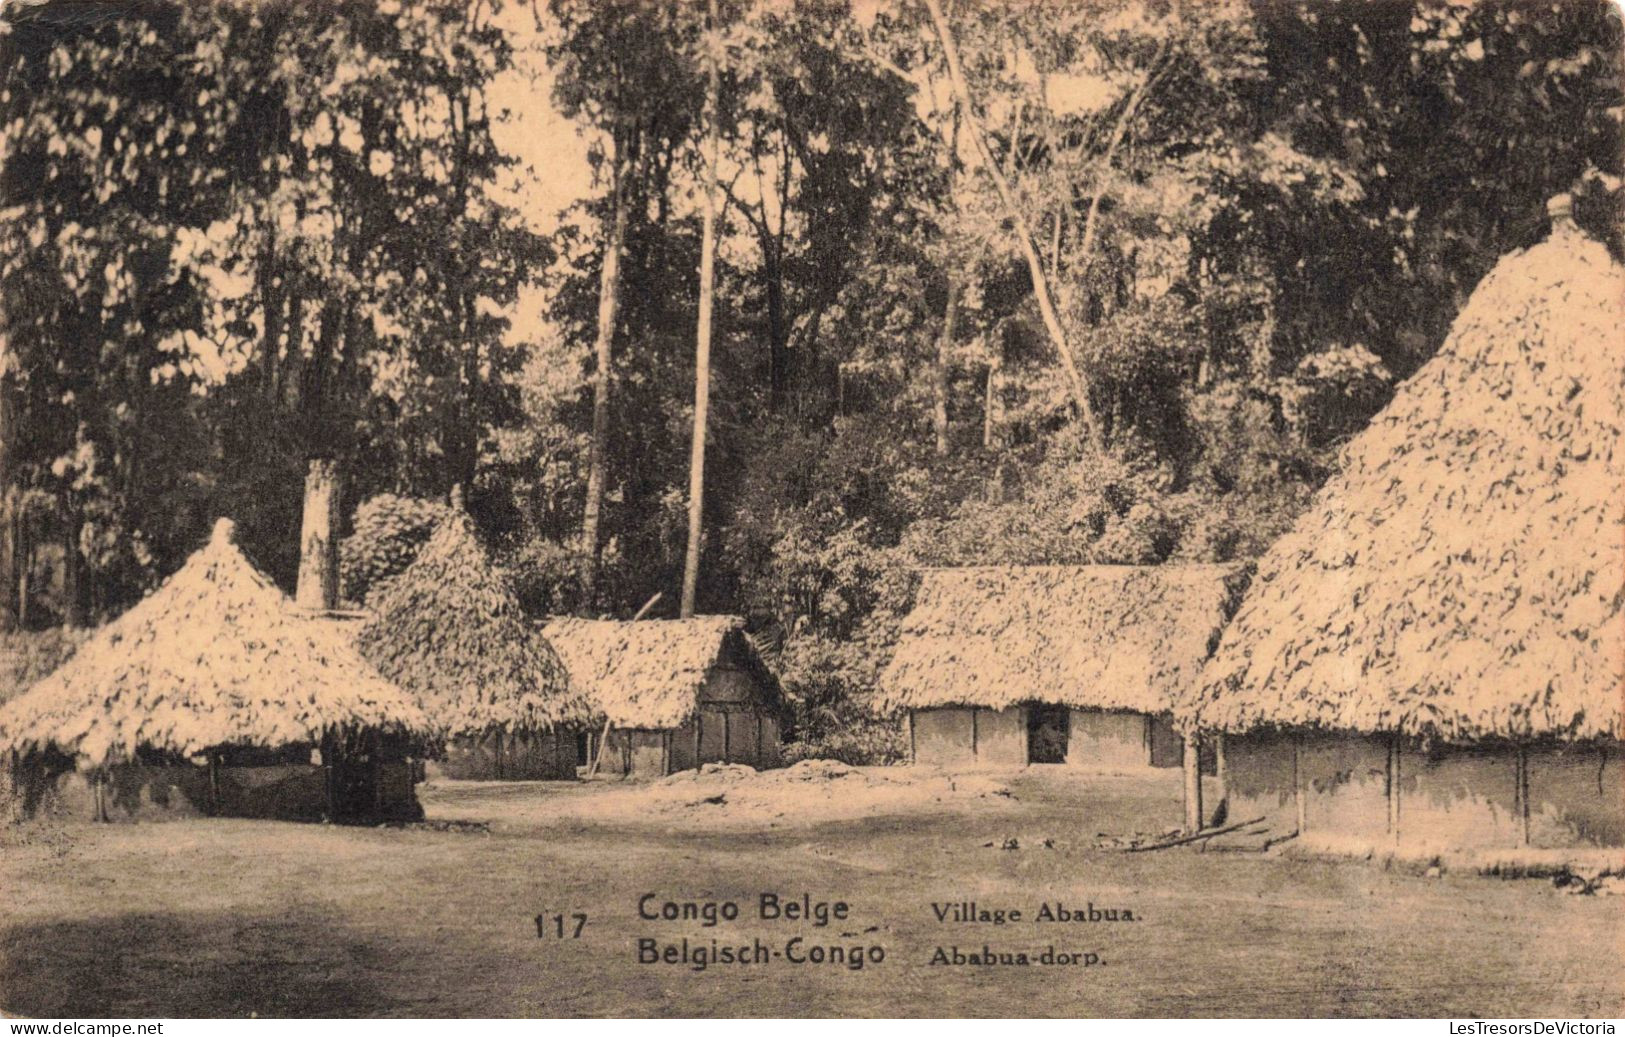 CONGO KINSHASA - Congo Belge -  Village Ababua - Carte Postale Ancienne - Congo Belge